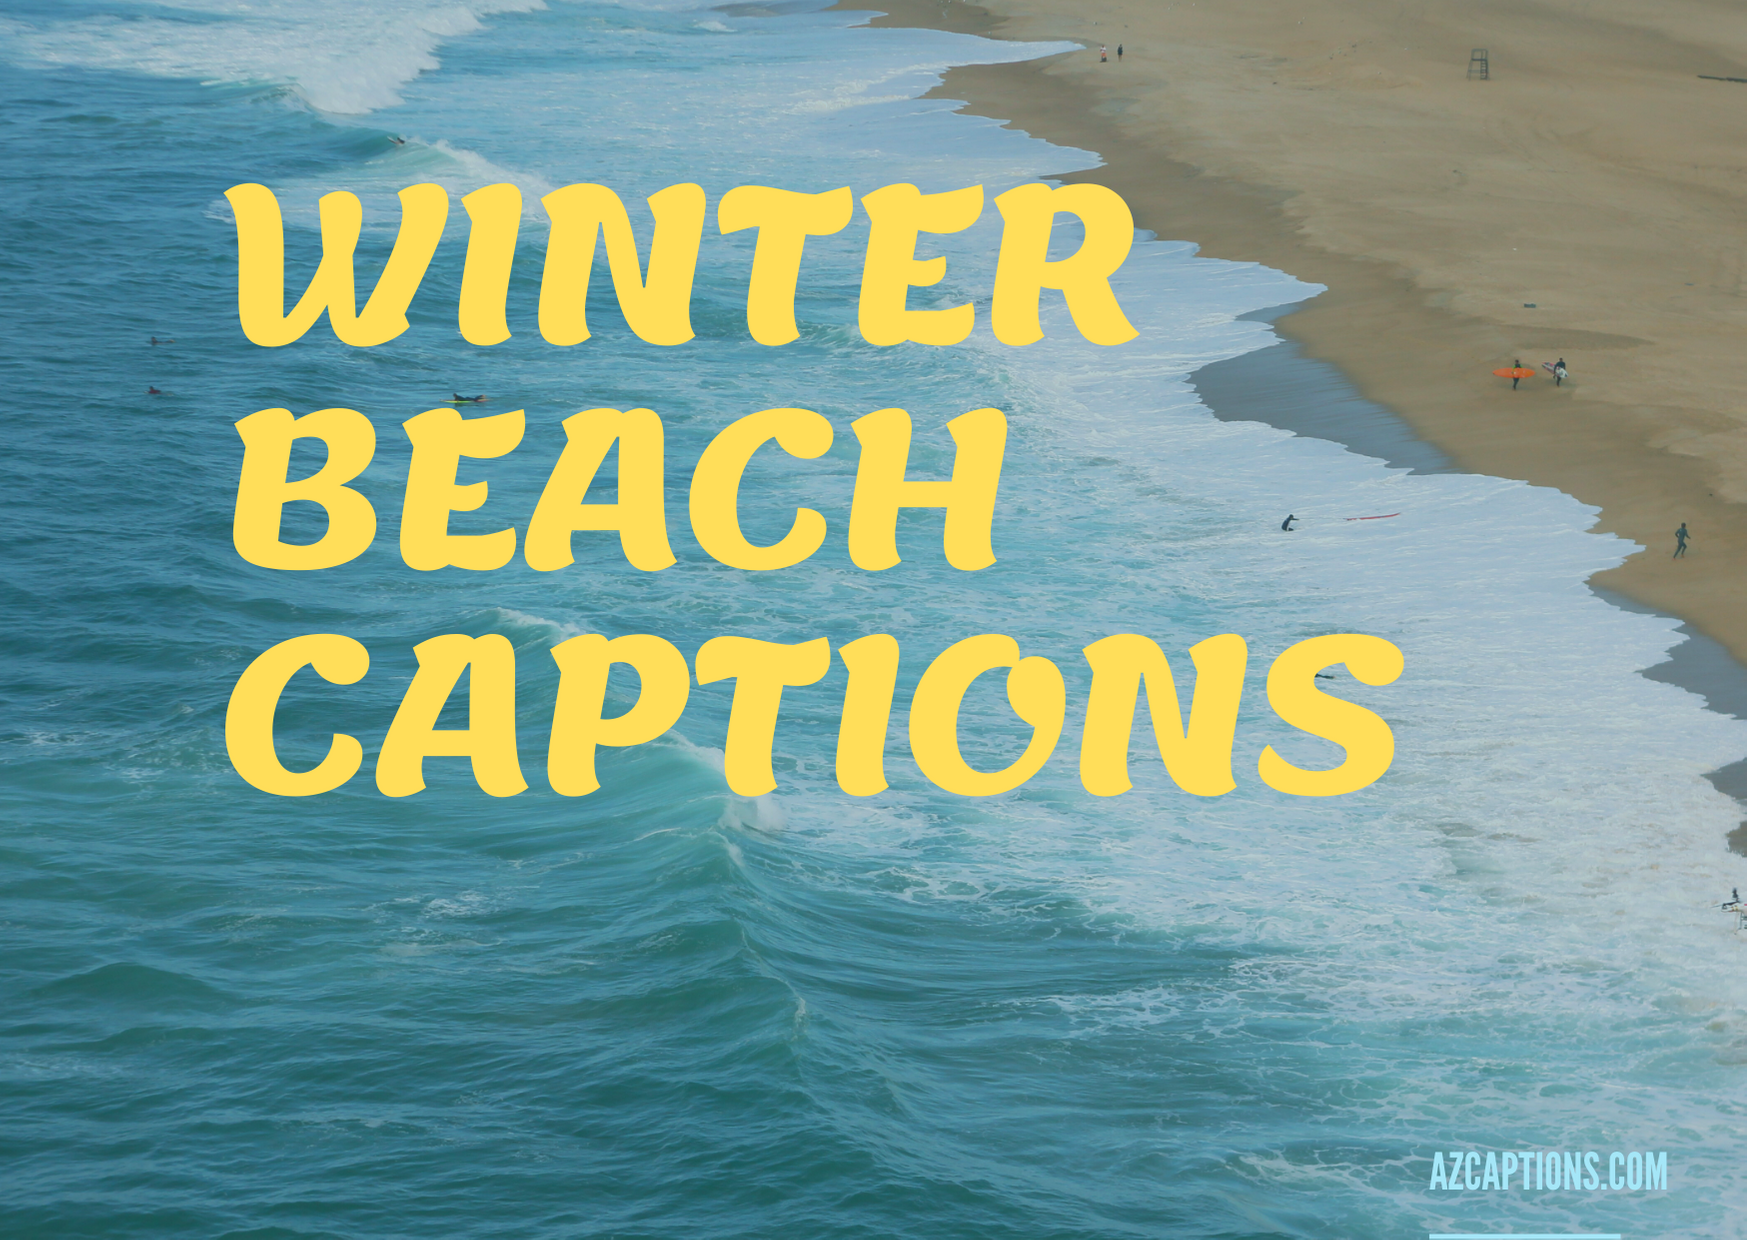 WINTER BEACH CAPTIONS